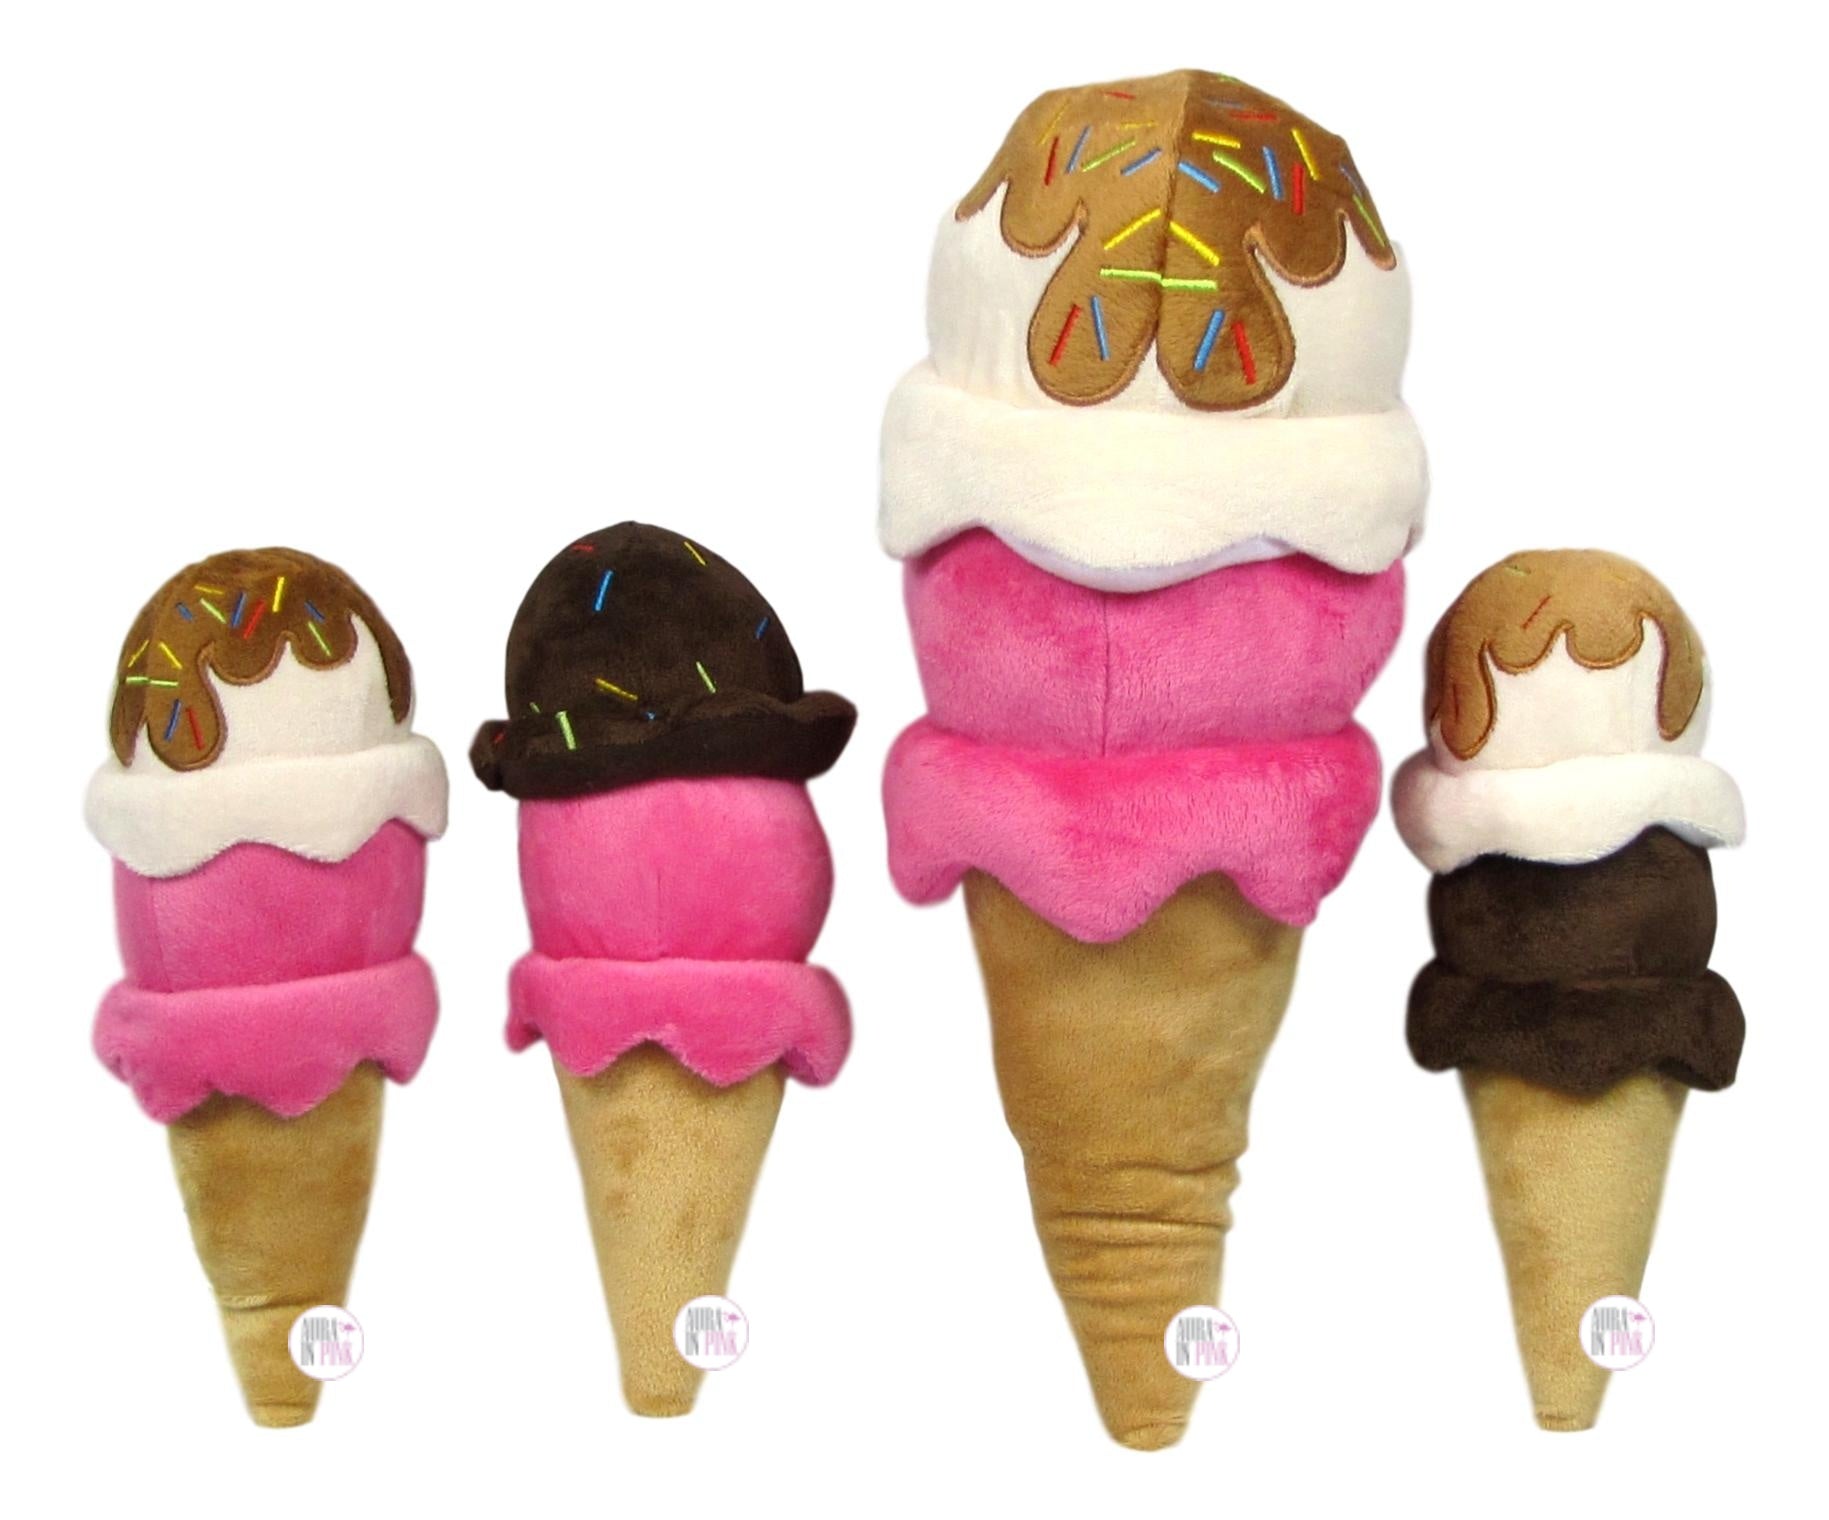 Ice-Cream Cone, with pink ice-cream scoop